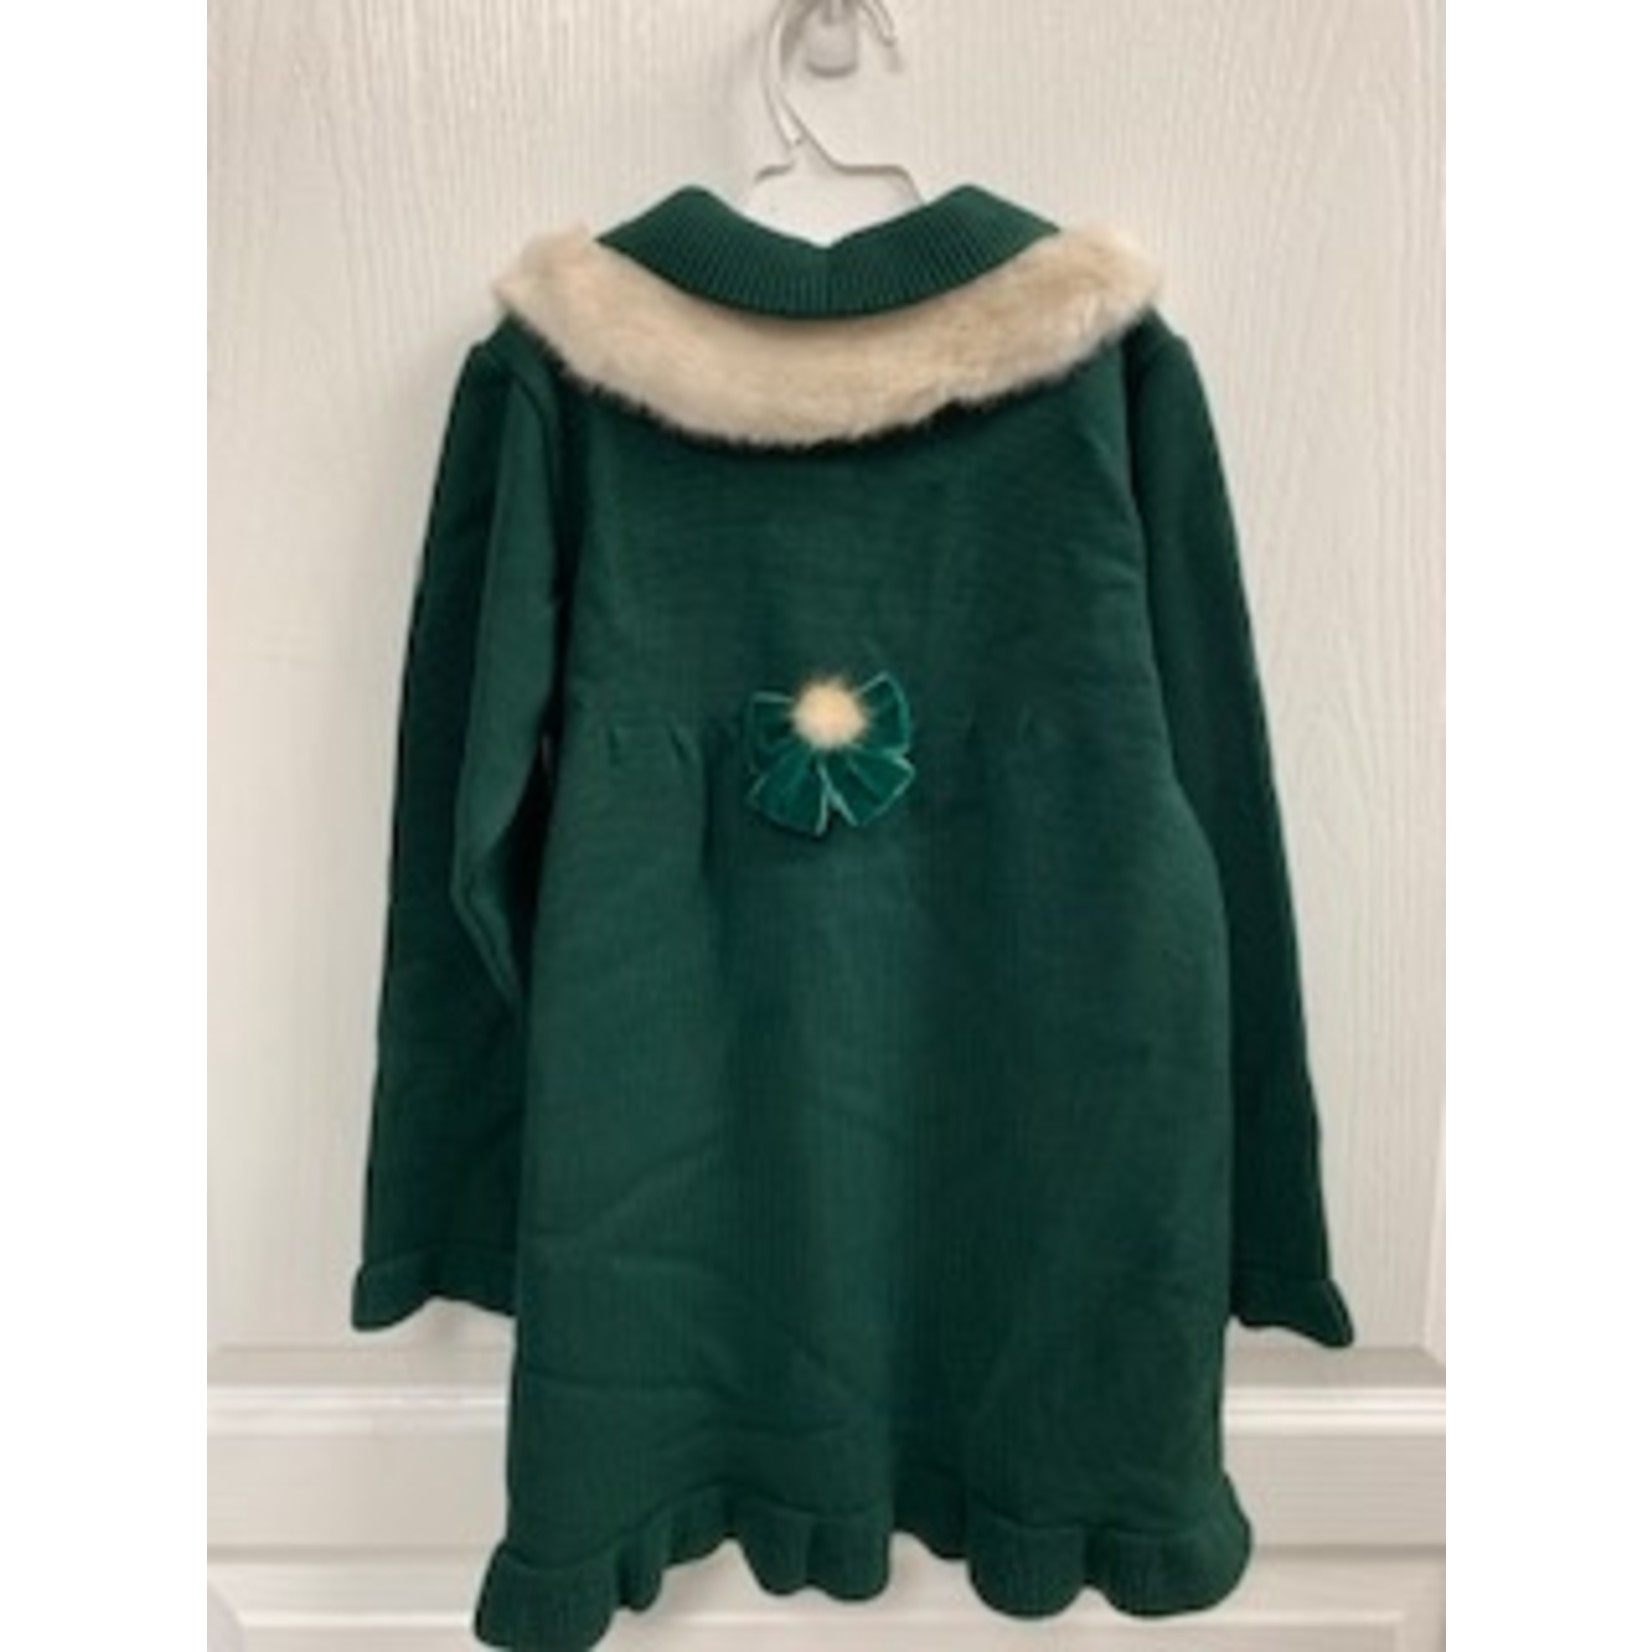 Nova Artesania Granlei Green Knitted Coat sz 8 Years